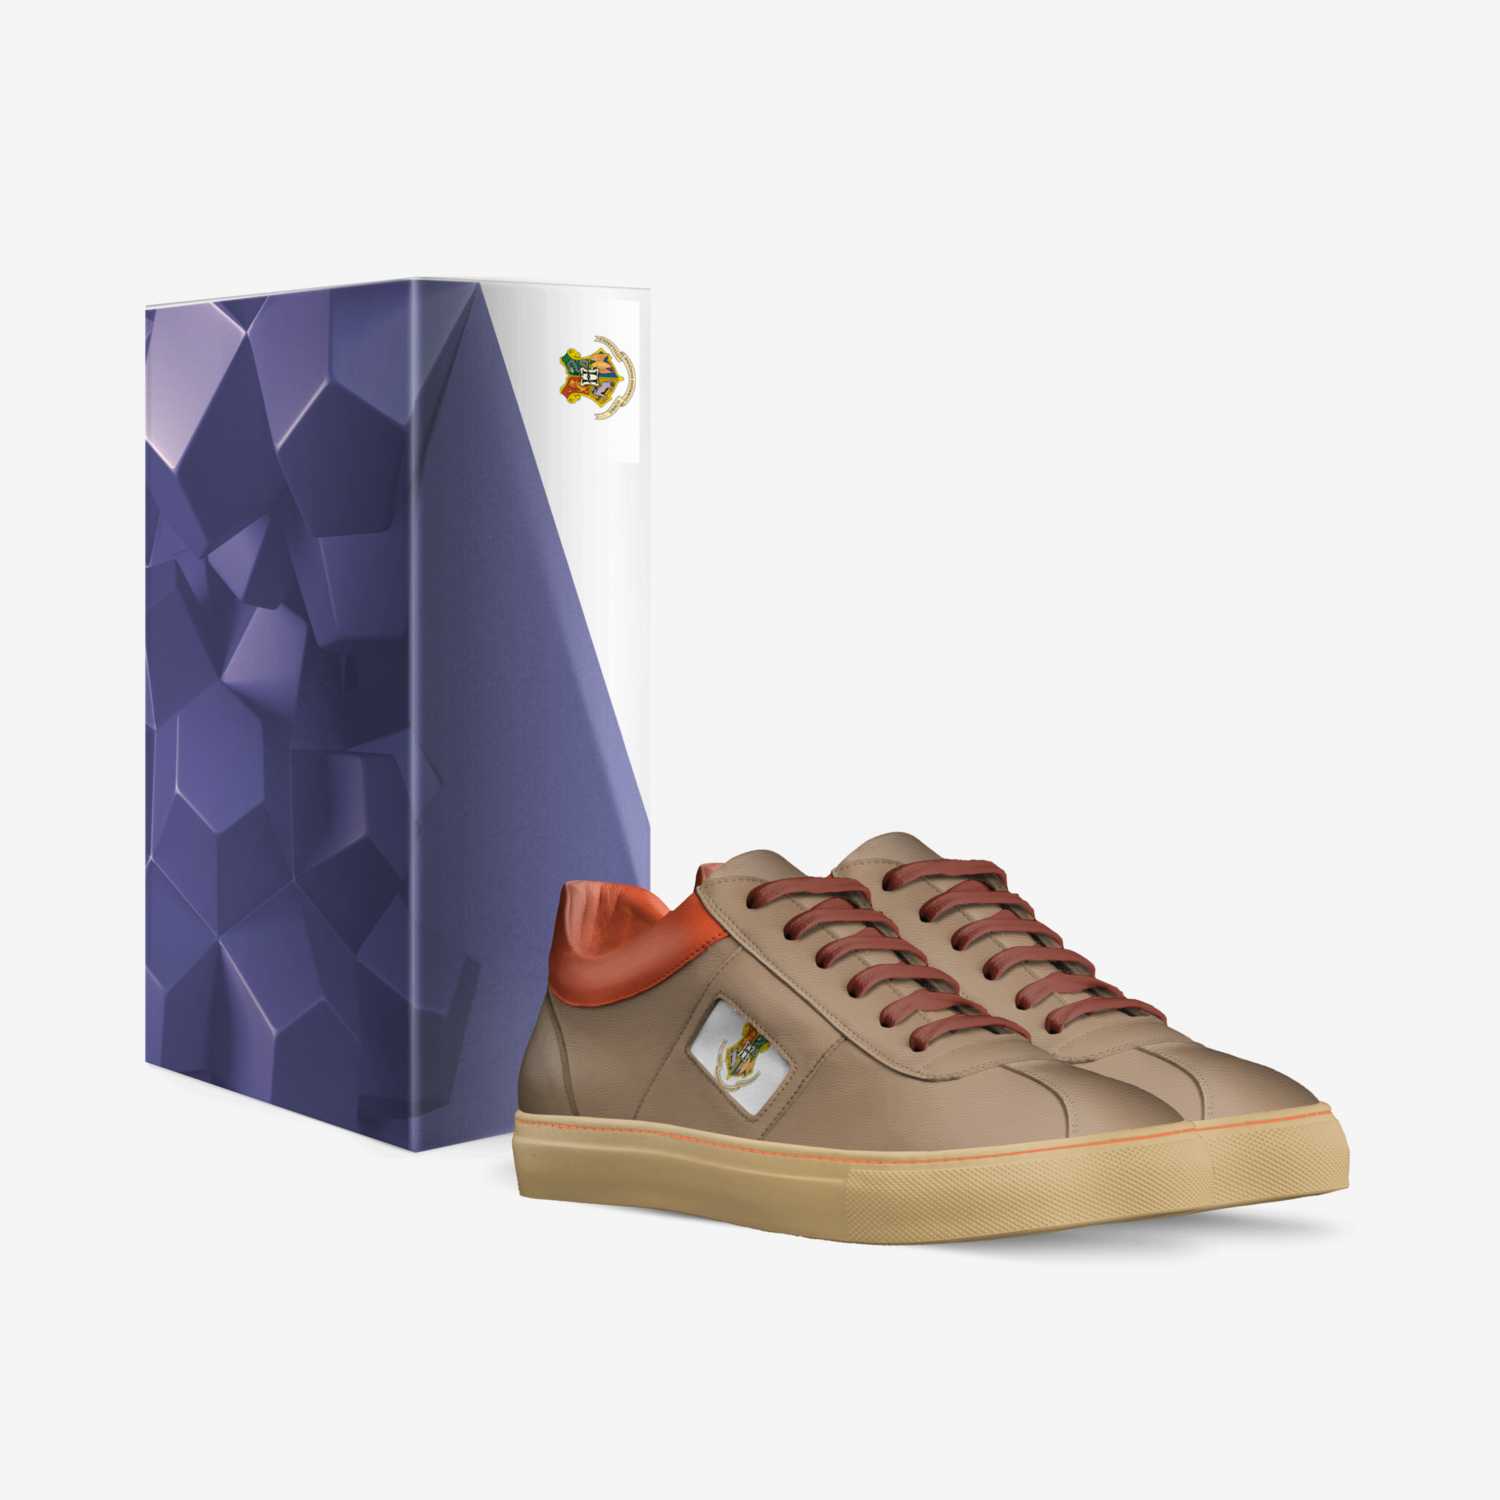 starsign custom made in Italy shoes by Joeliiiiiio | Box view